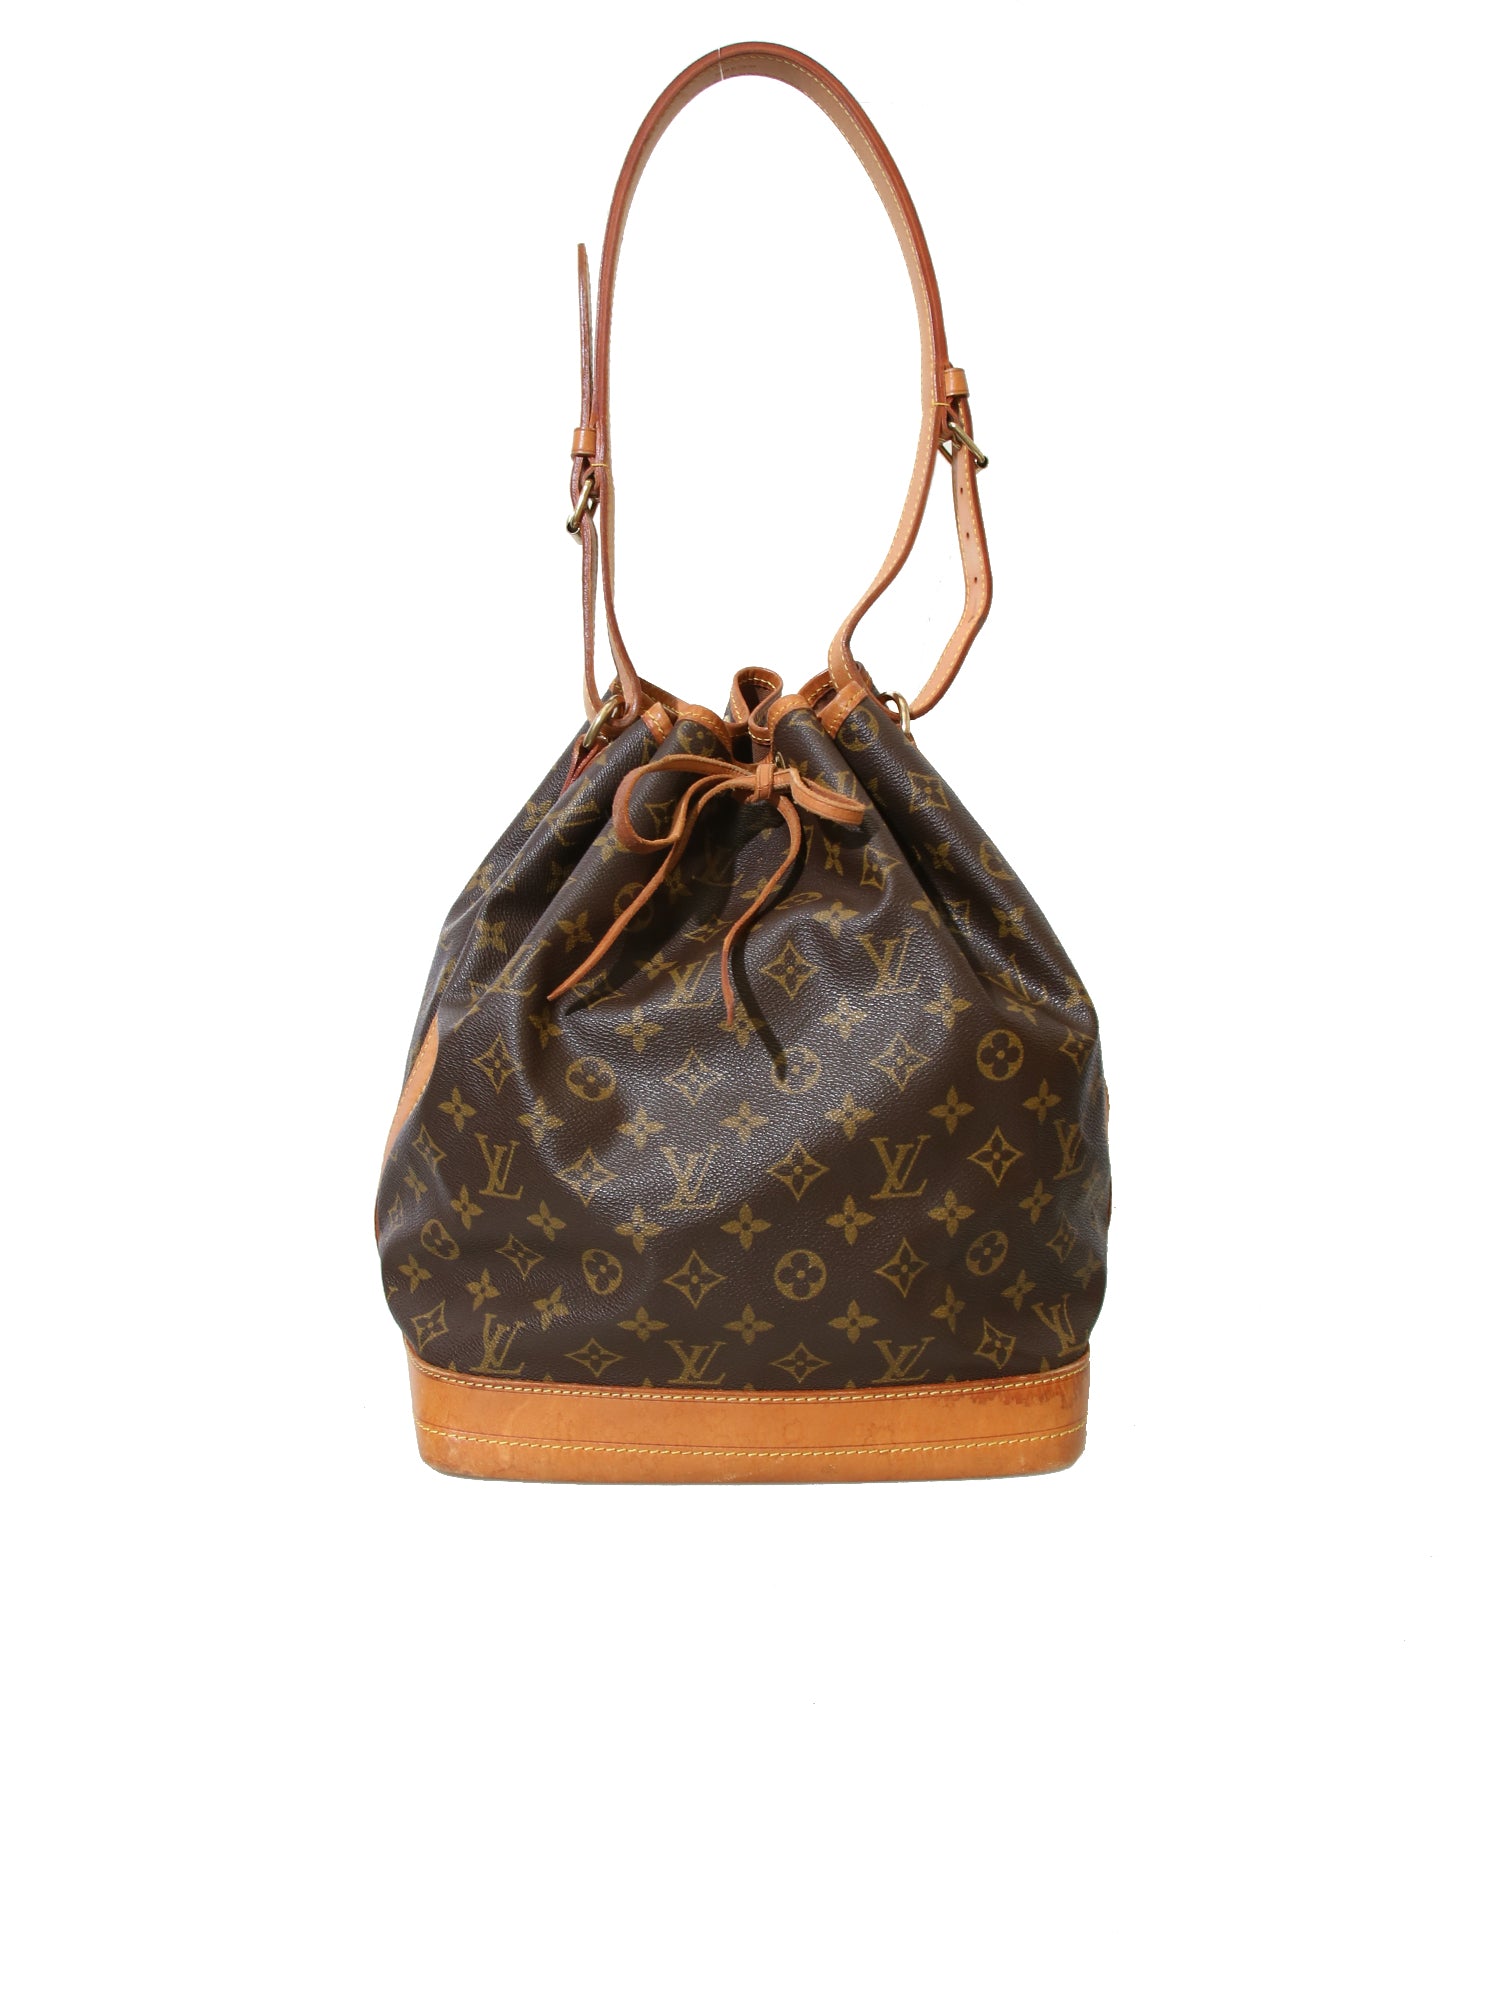 Louis Vuitton Noe Handbag Monogram Canvas Large Brown